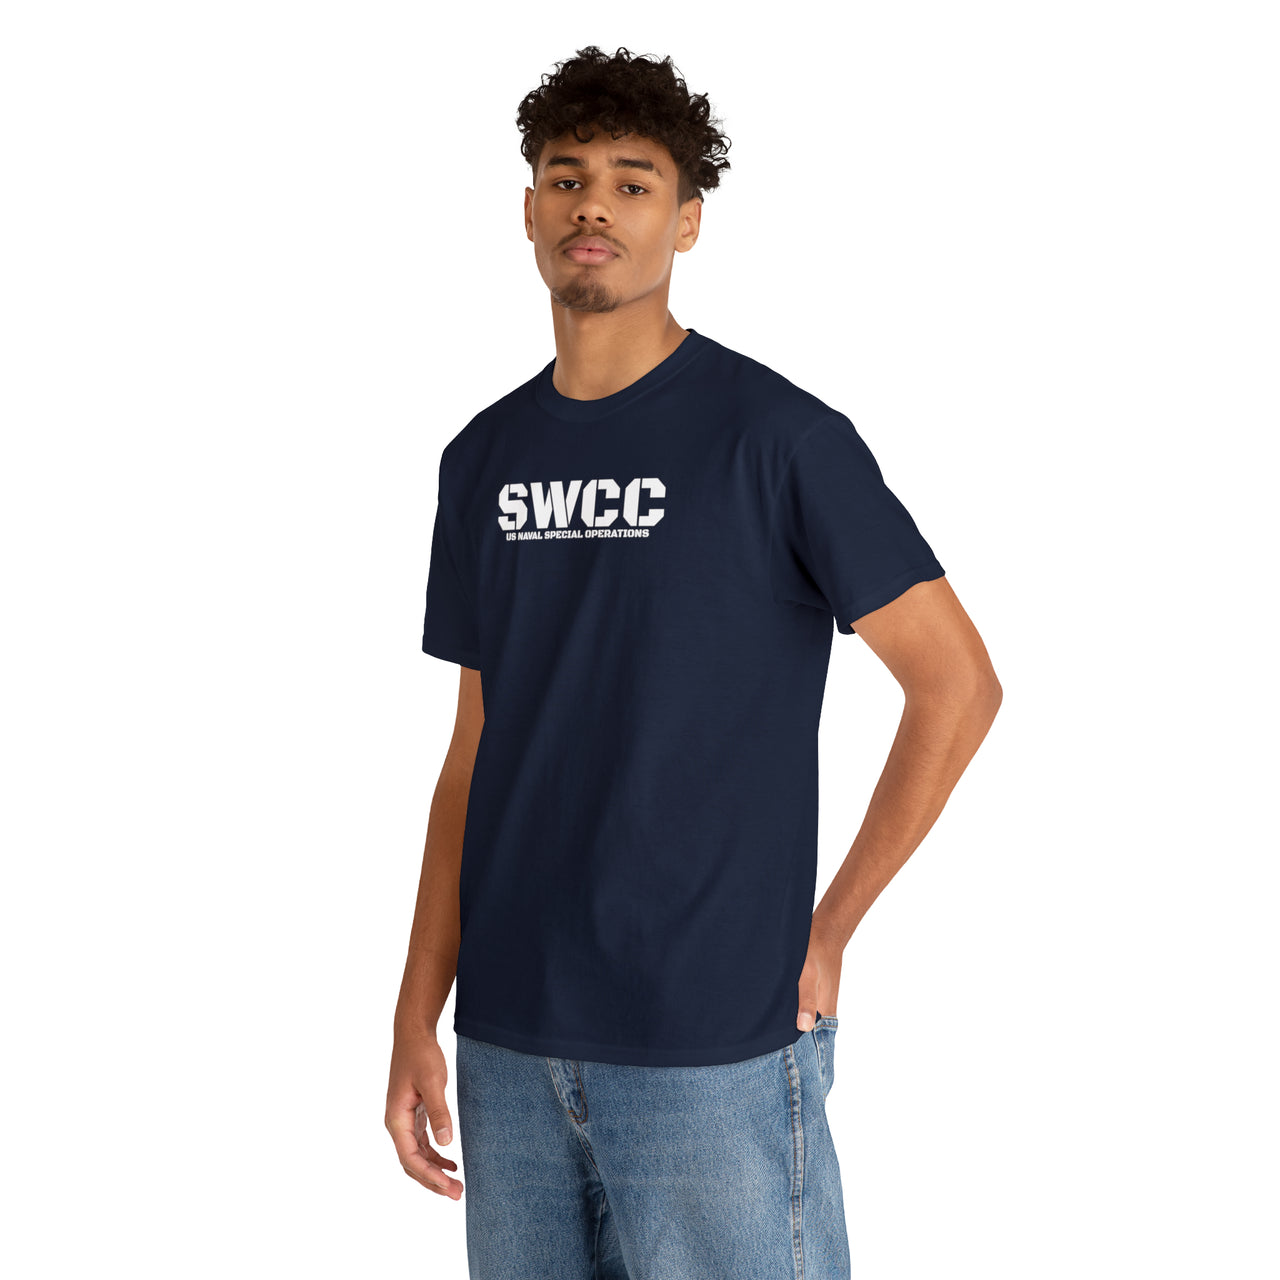 SWCC - Basic (White)